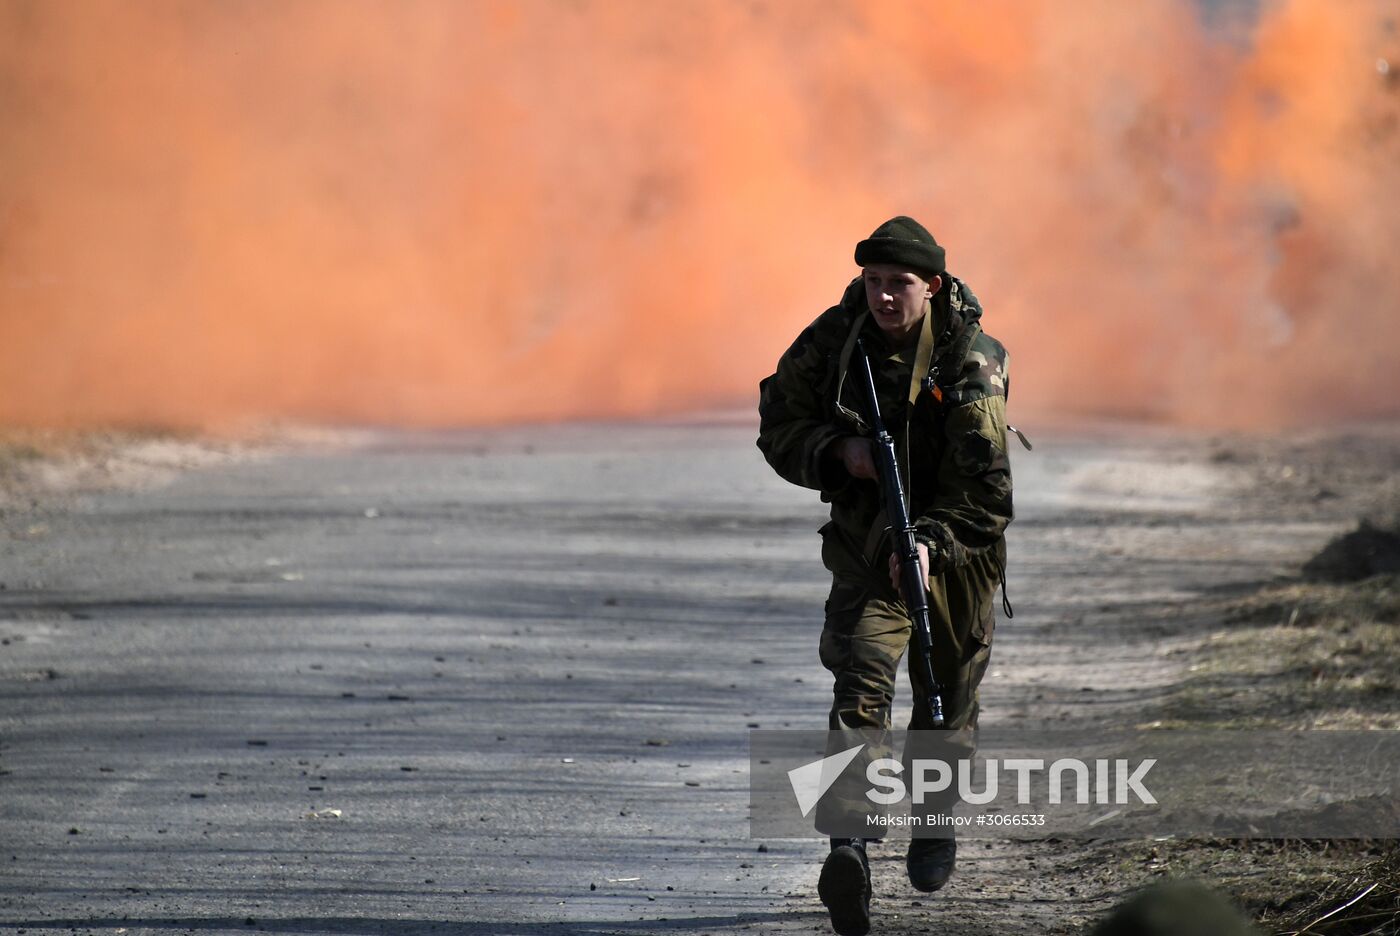 International tactical paratrooper drills in Vitebsk